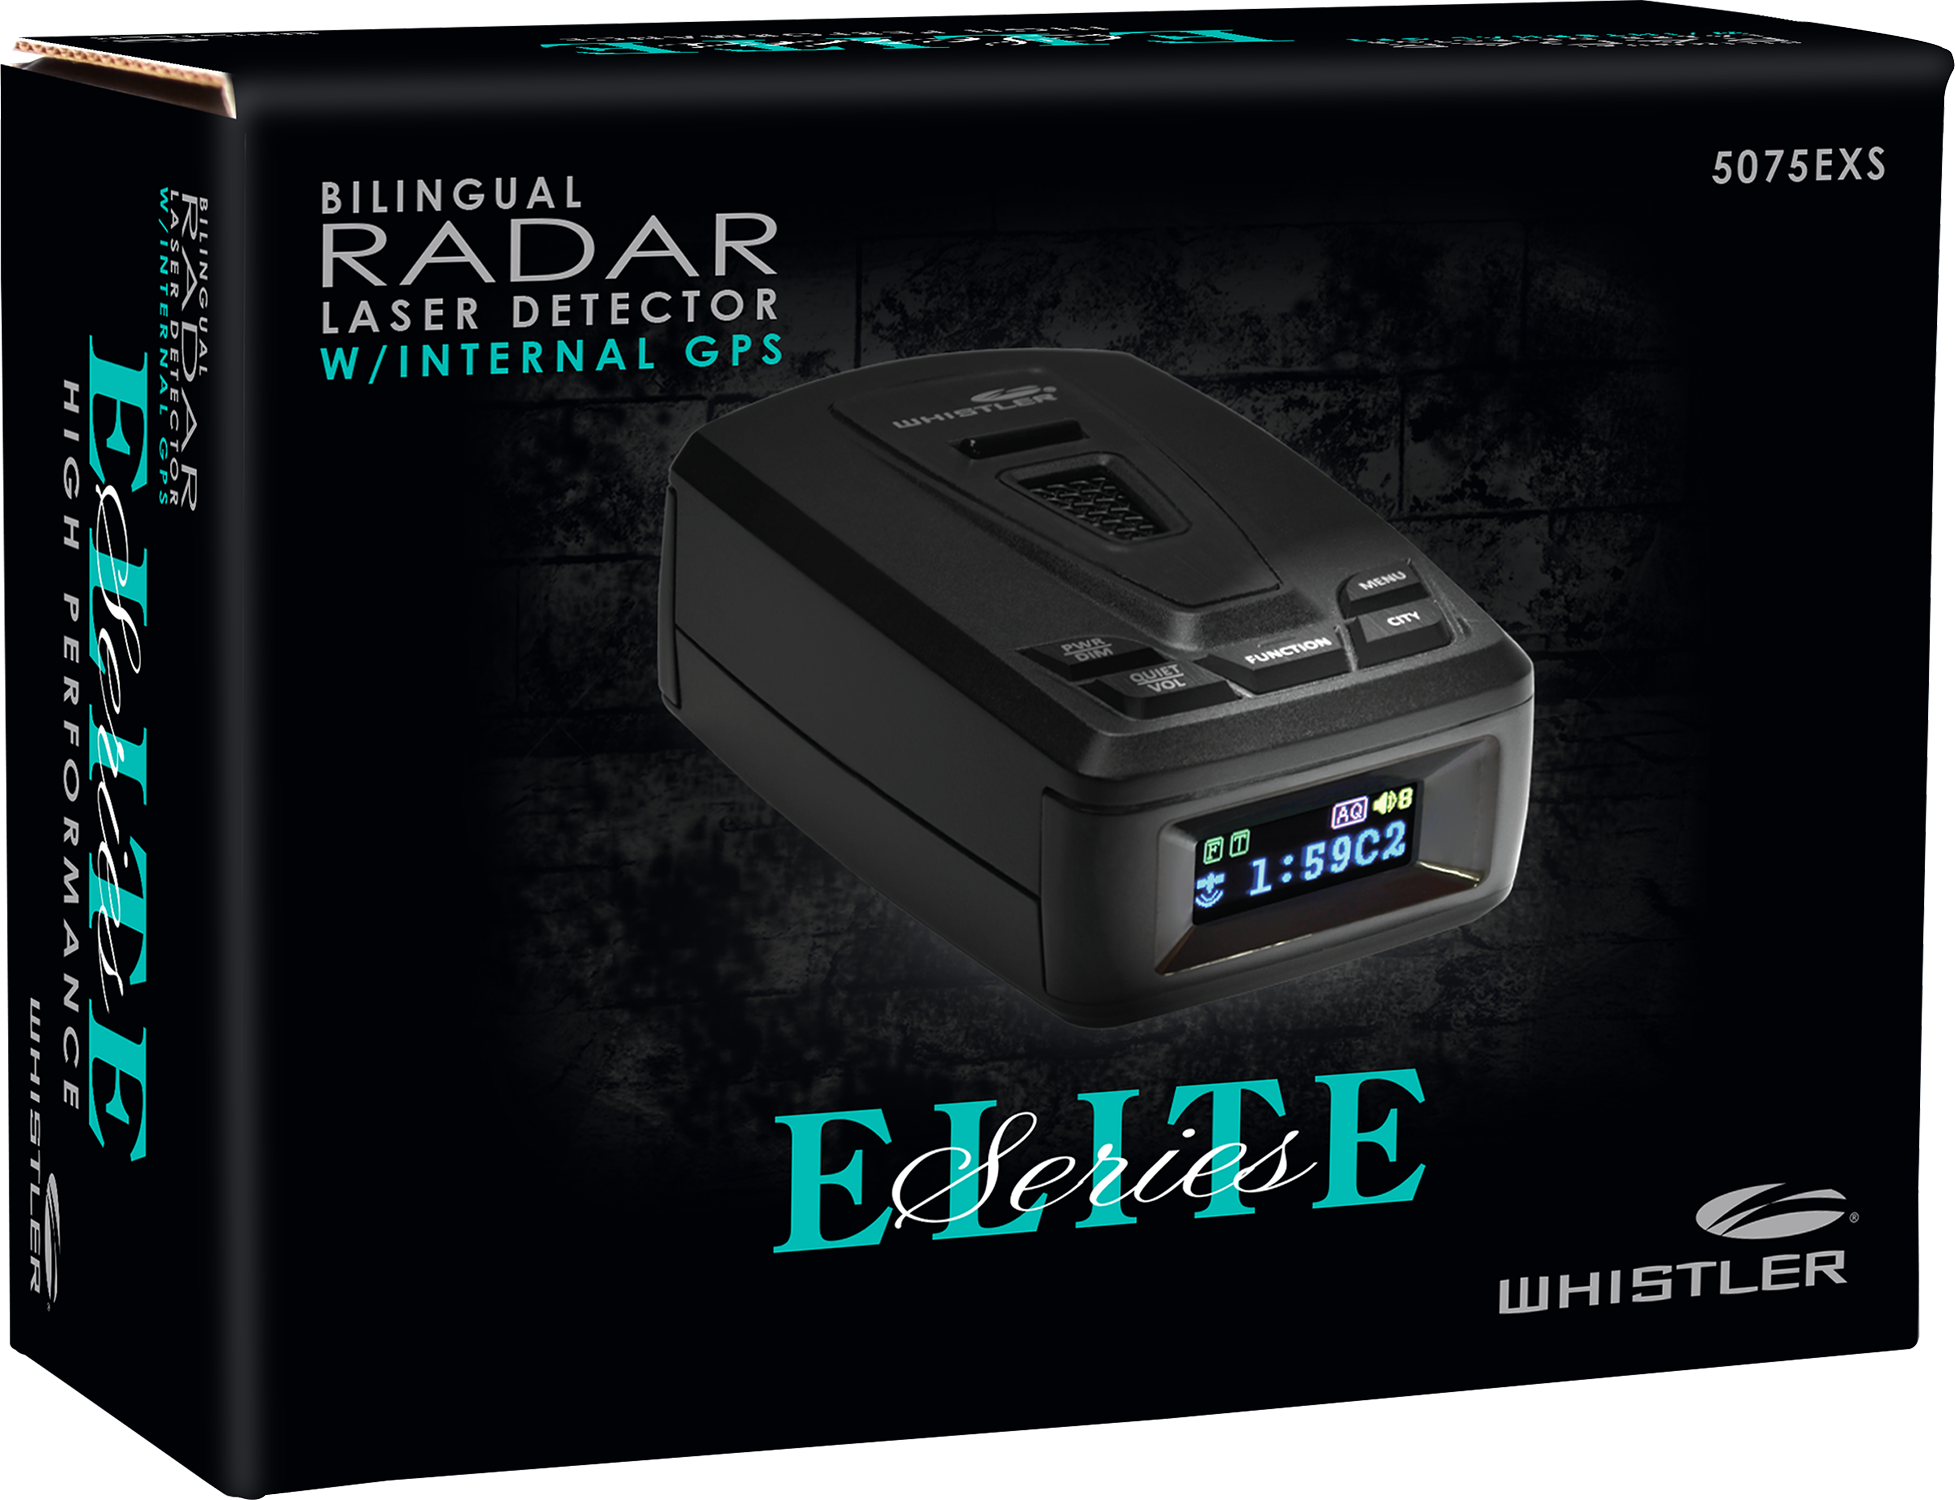 5075Exs Elite Series Compact Radar Detector W Internal Gps : The elite